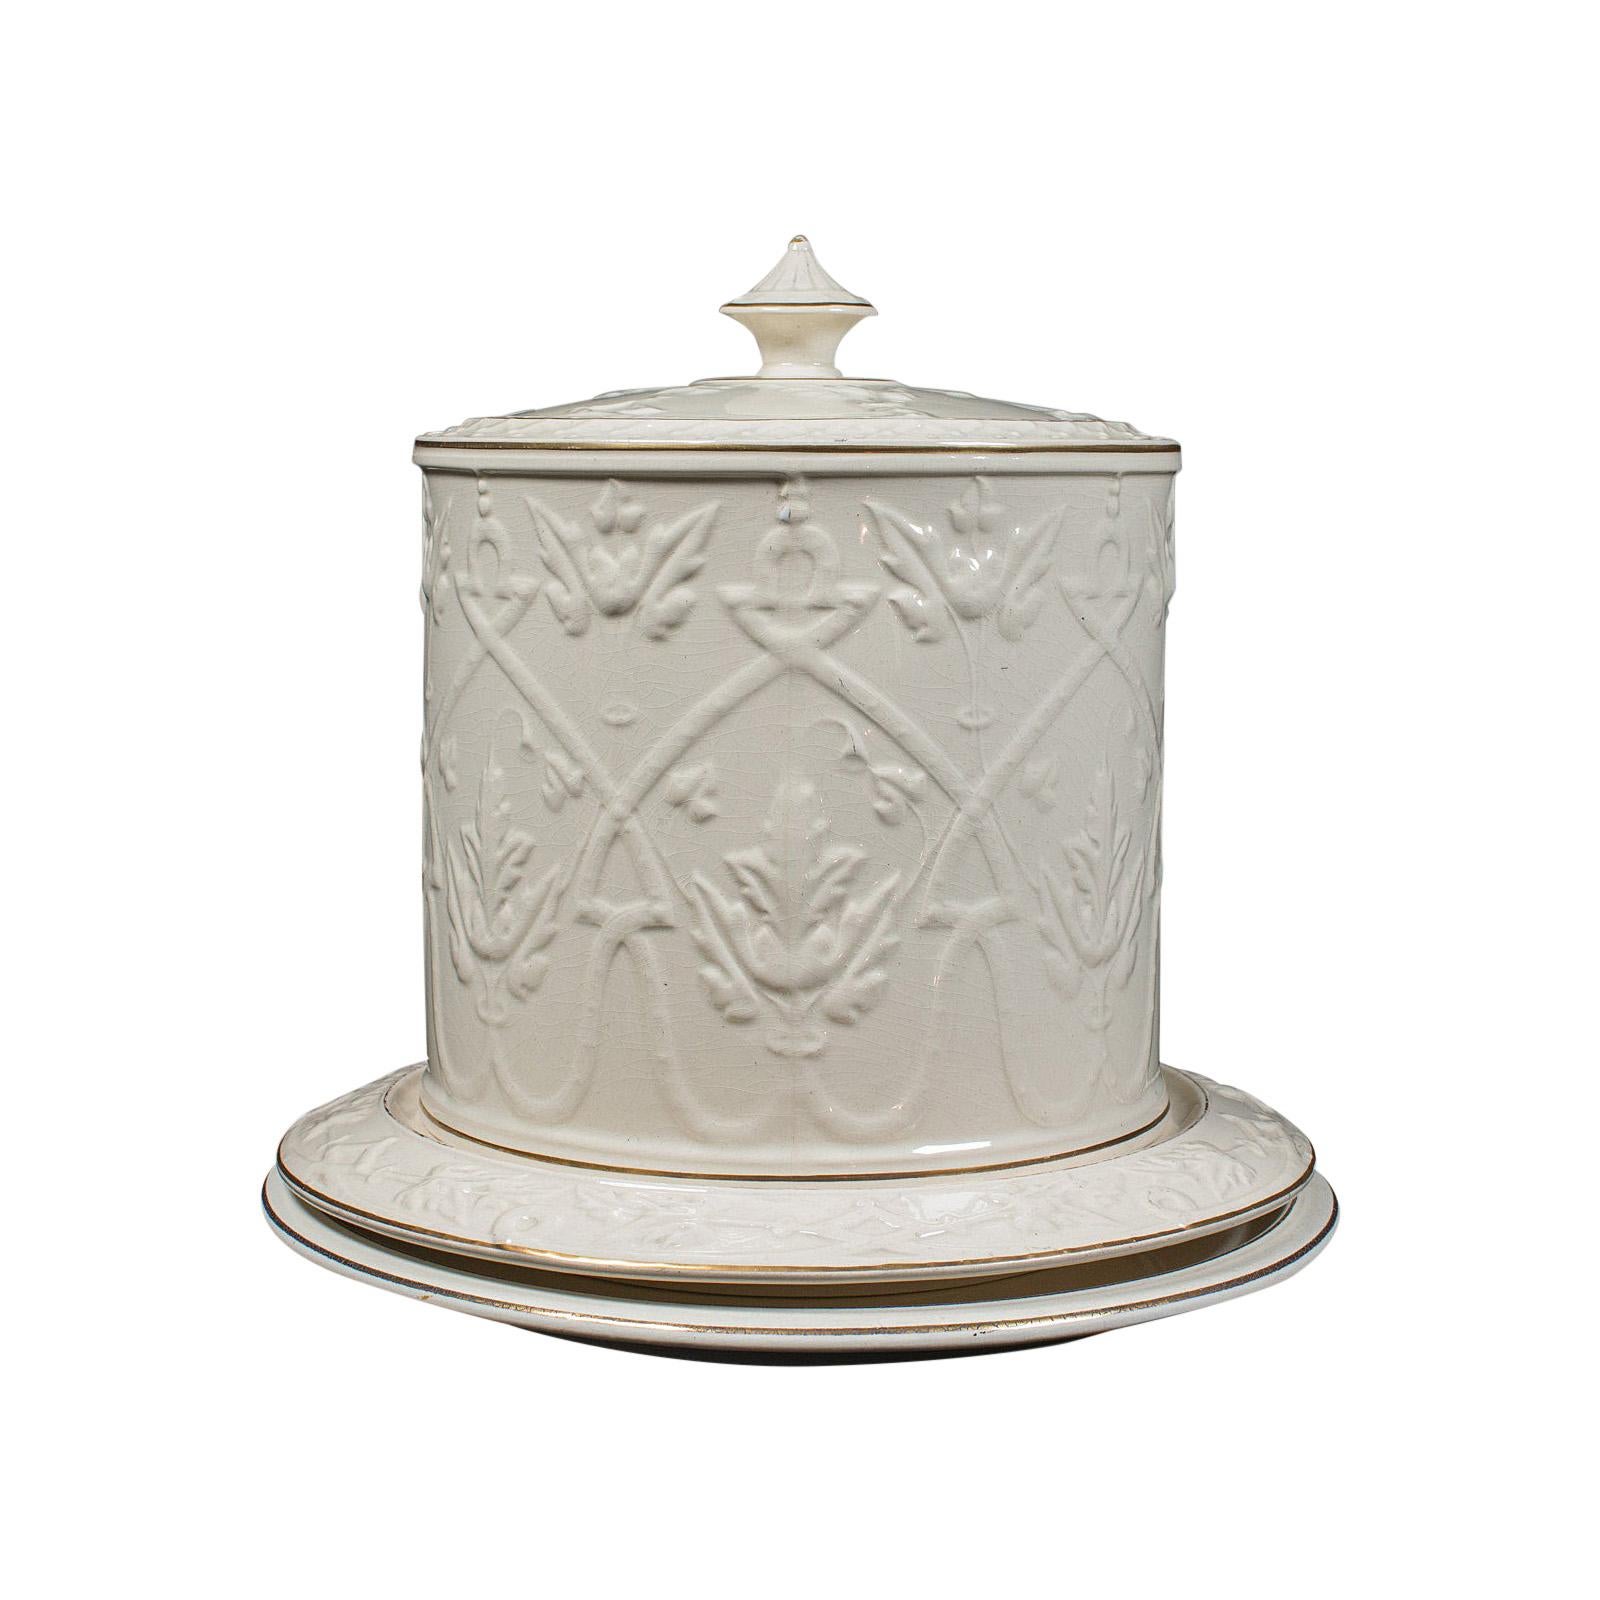 https://a.1stdibscdn.com/antique-stilton-dome-english-ceramic-cheese-keeper-cracker-plate-victorian-for-sale/1121189/f_244505021625826296137/24450502_master.jpg